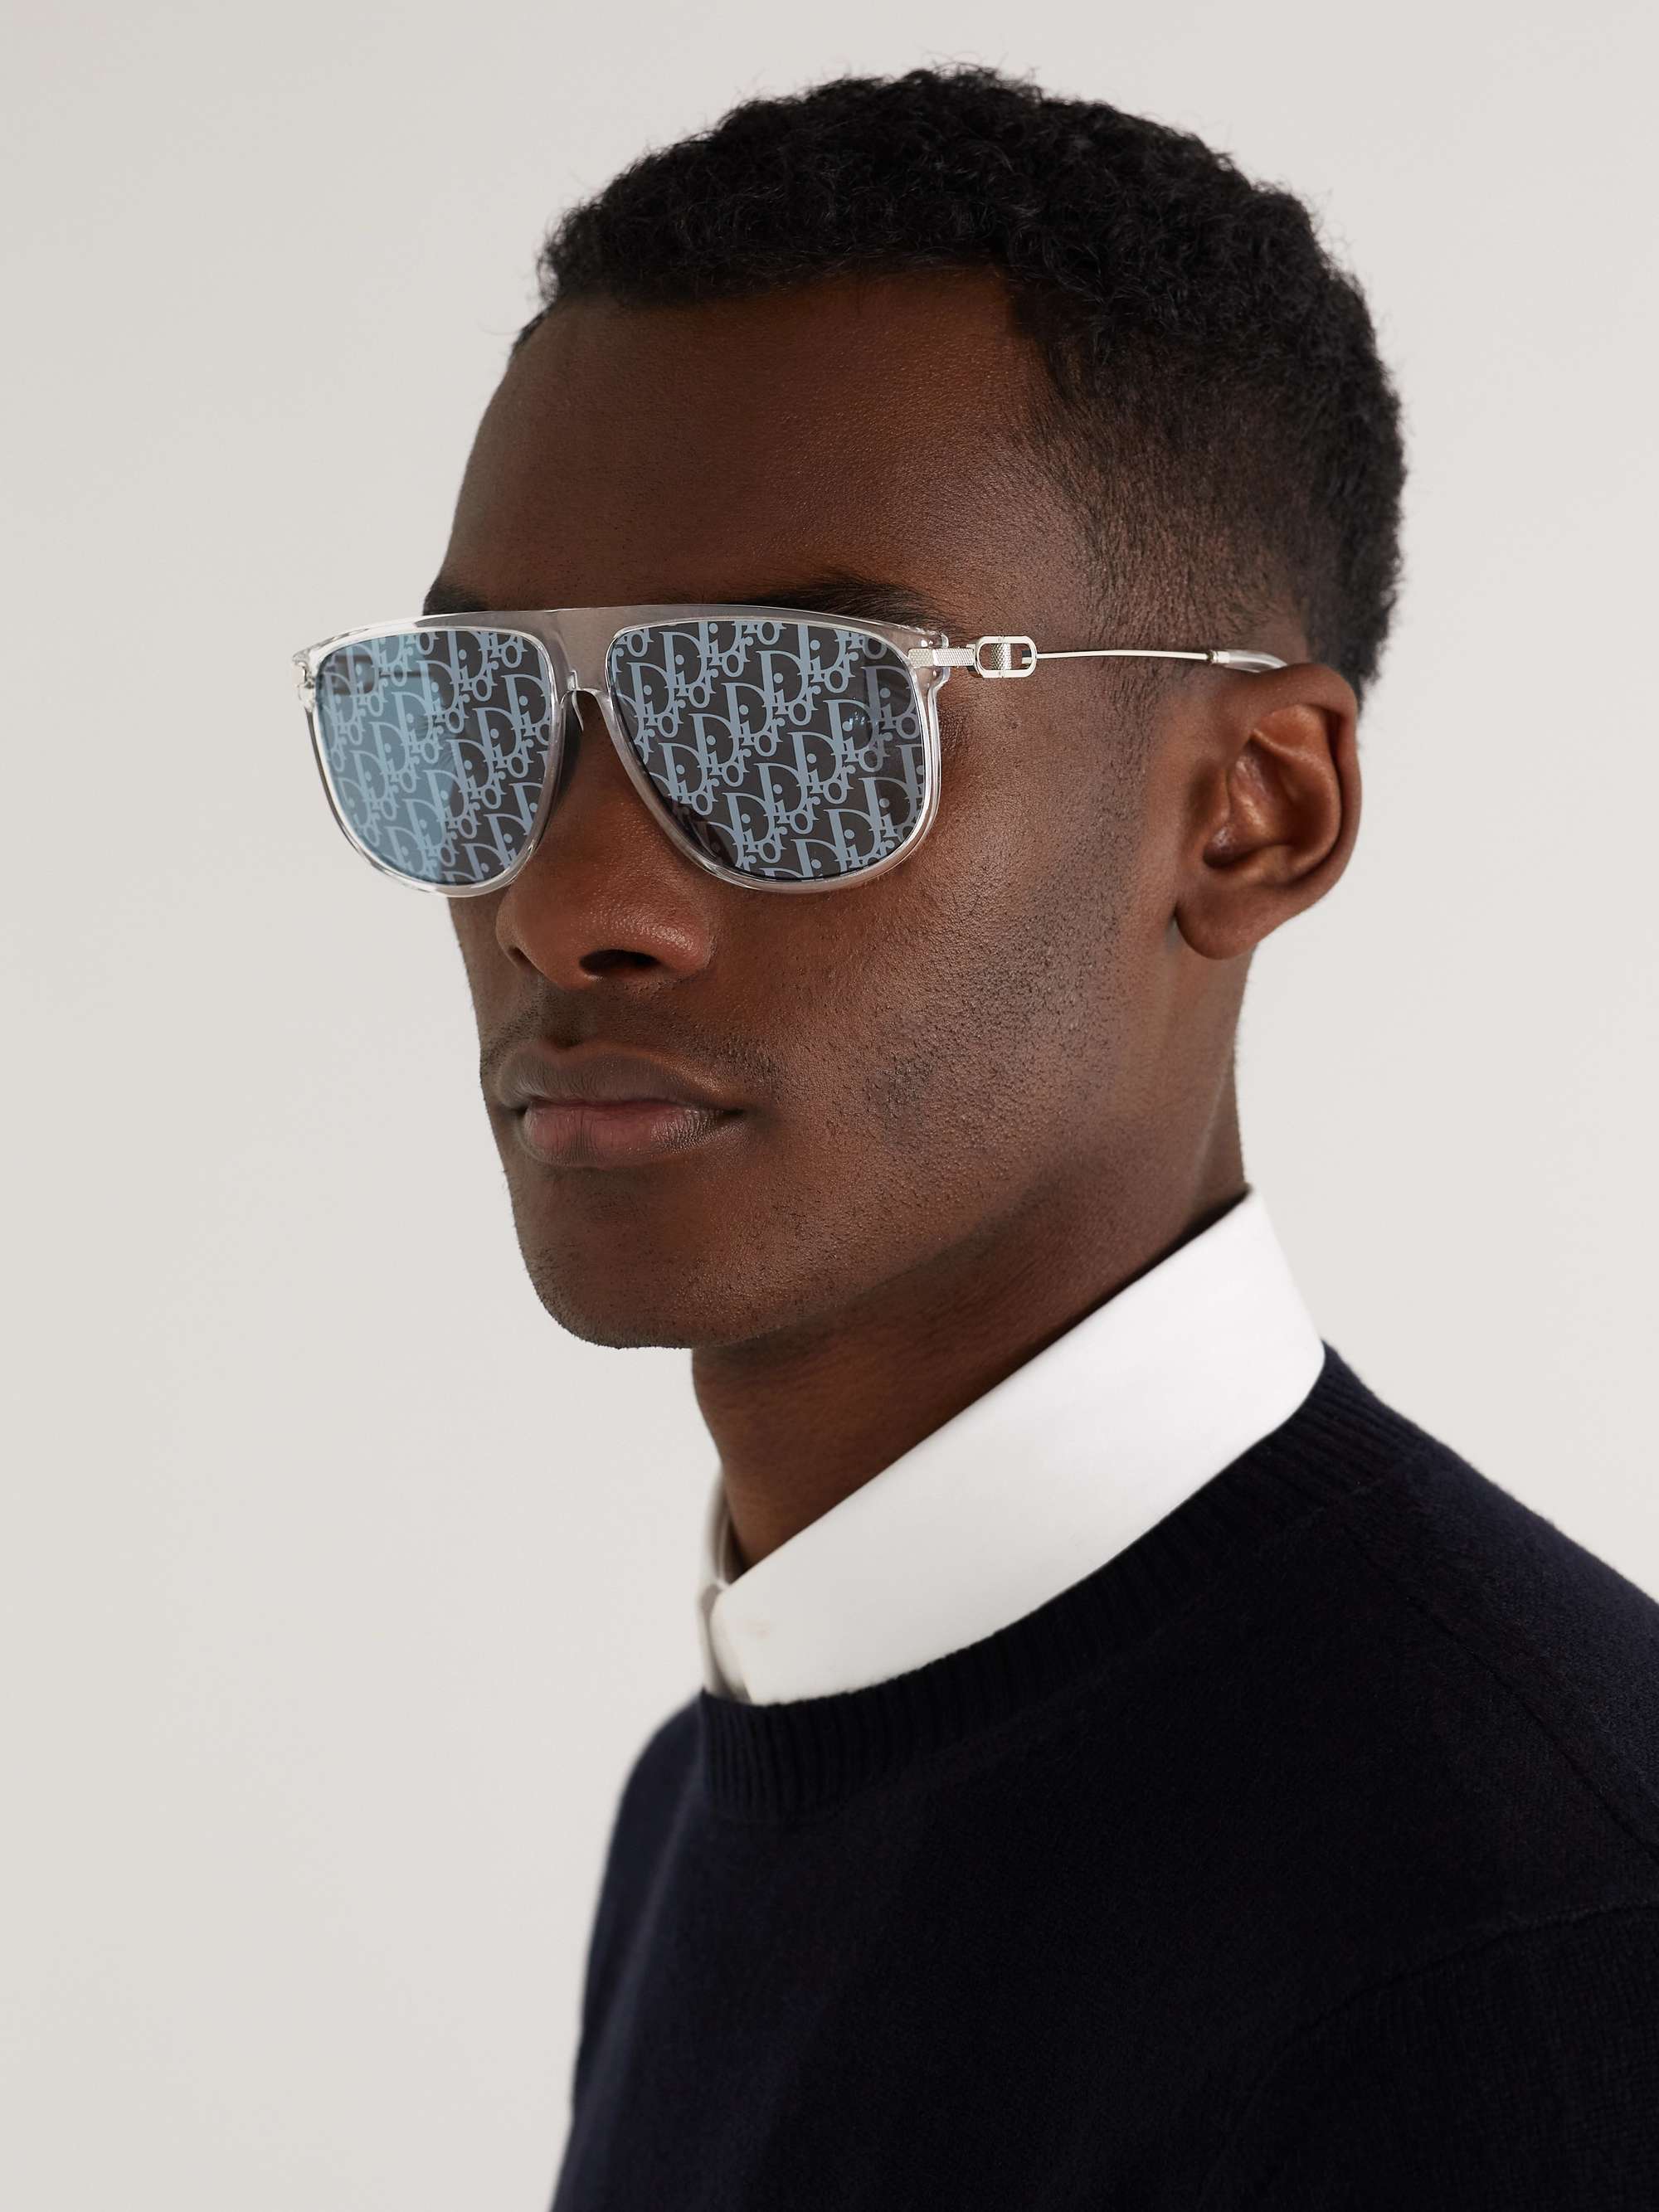 Dior Eyewear - Men - CD Link S2U D-Frame Acetate and Silver-Tone Mirrored Sunglasses Silver